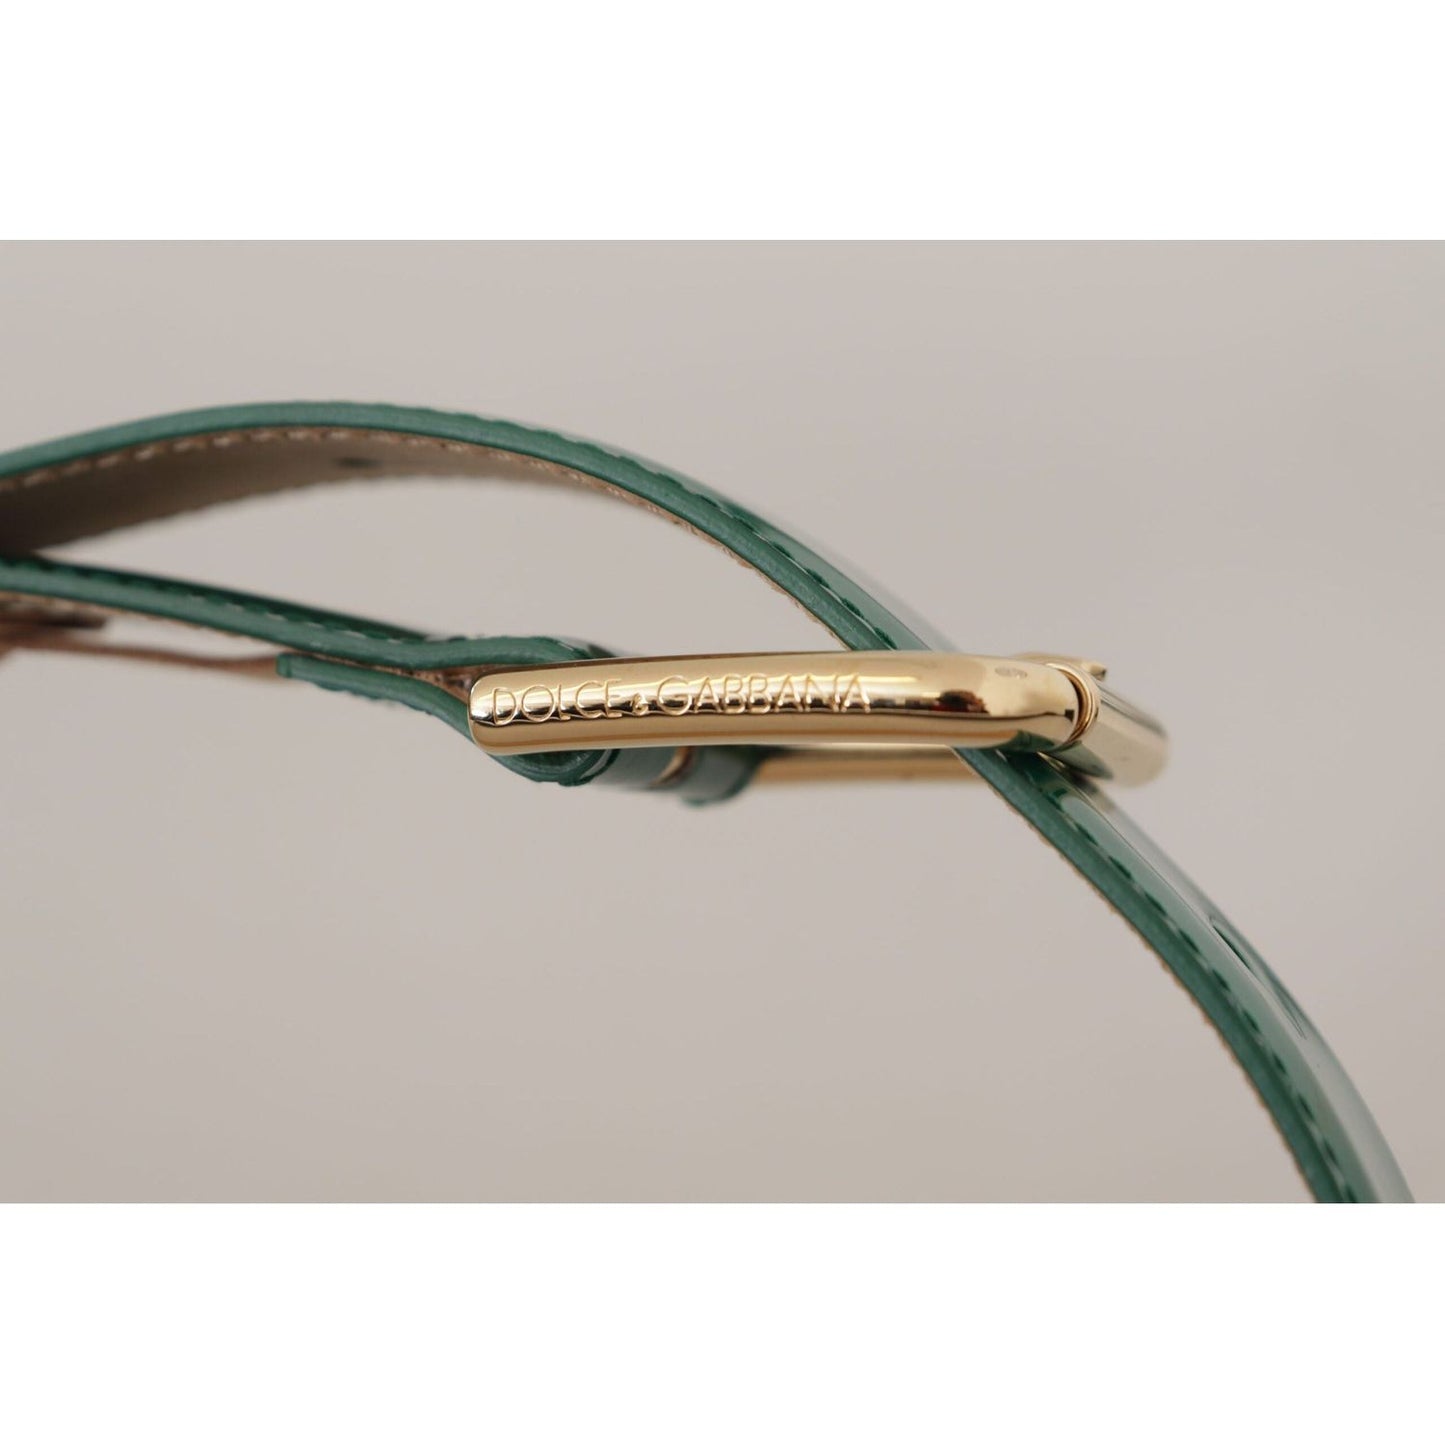 Dolce & Gabbana Elegant Green Leather Belt with Gold Buckle Detail green-patent-leather-logo-engraved-buckle-belt